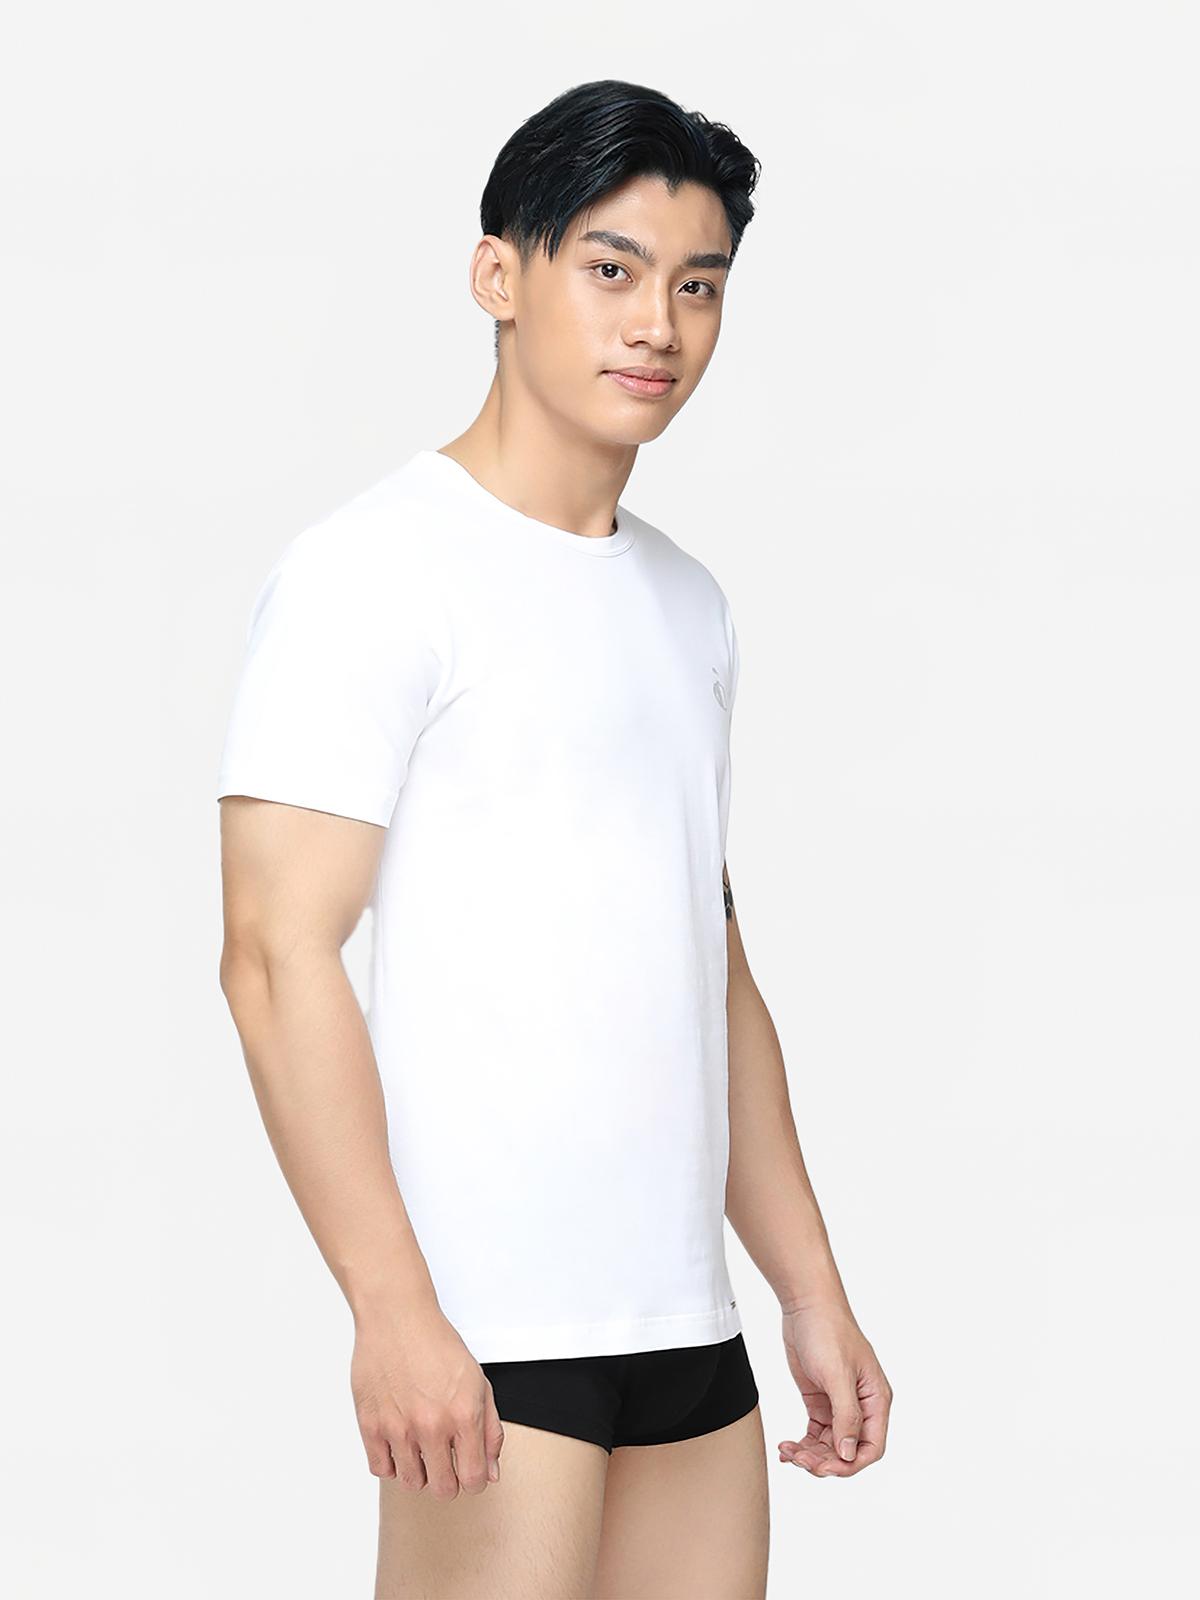 Áo T - Shirt nam Jockey Cotton compact in Haft boy - 7339